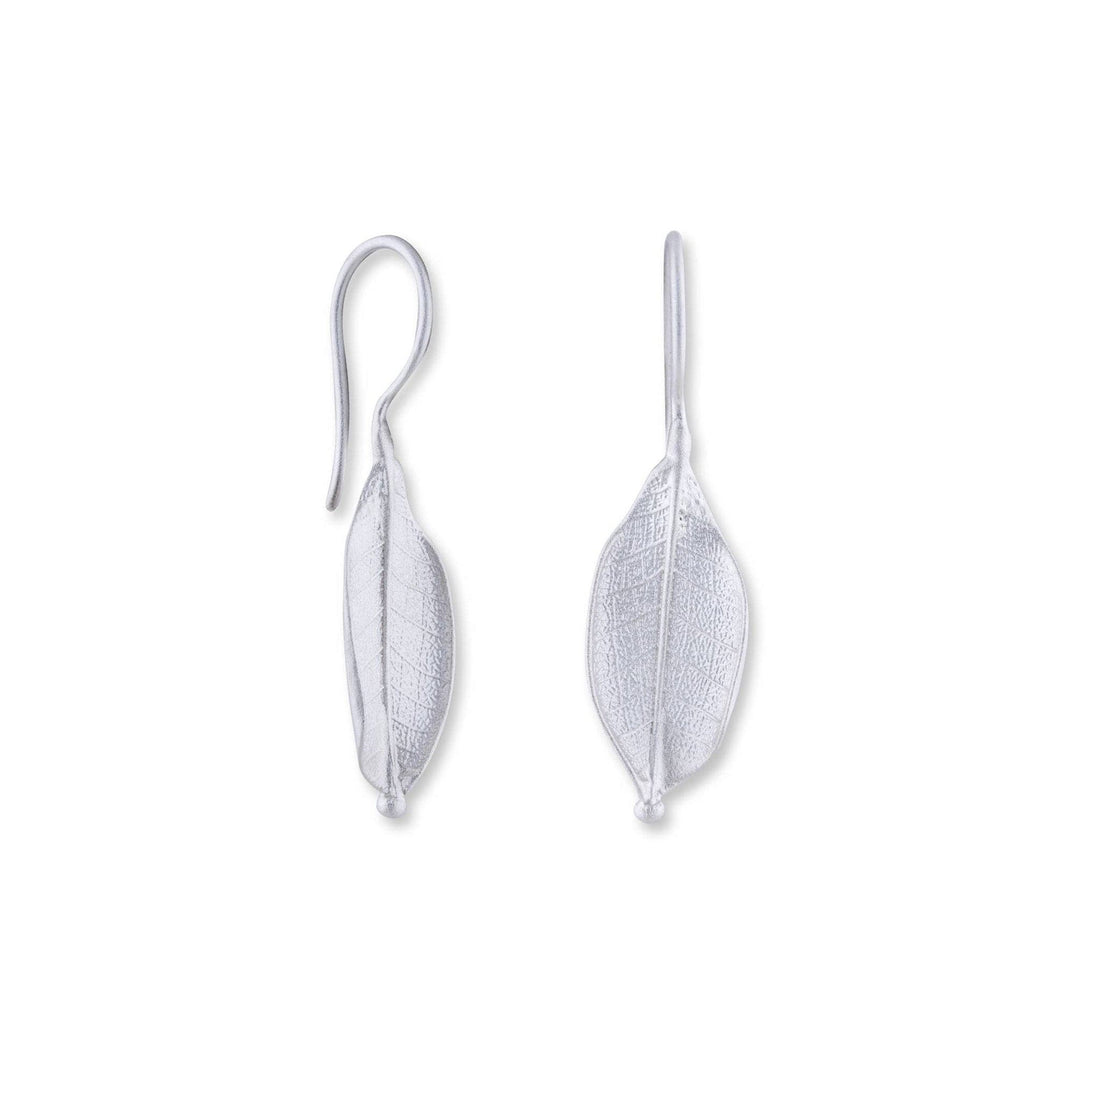 Lika Behar 'Machka Park' Sterling Silver Leaf Dangle Earrings